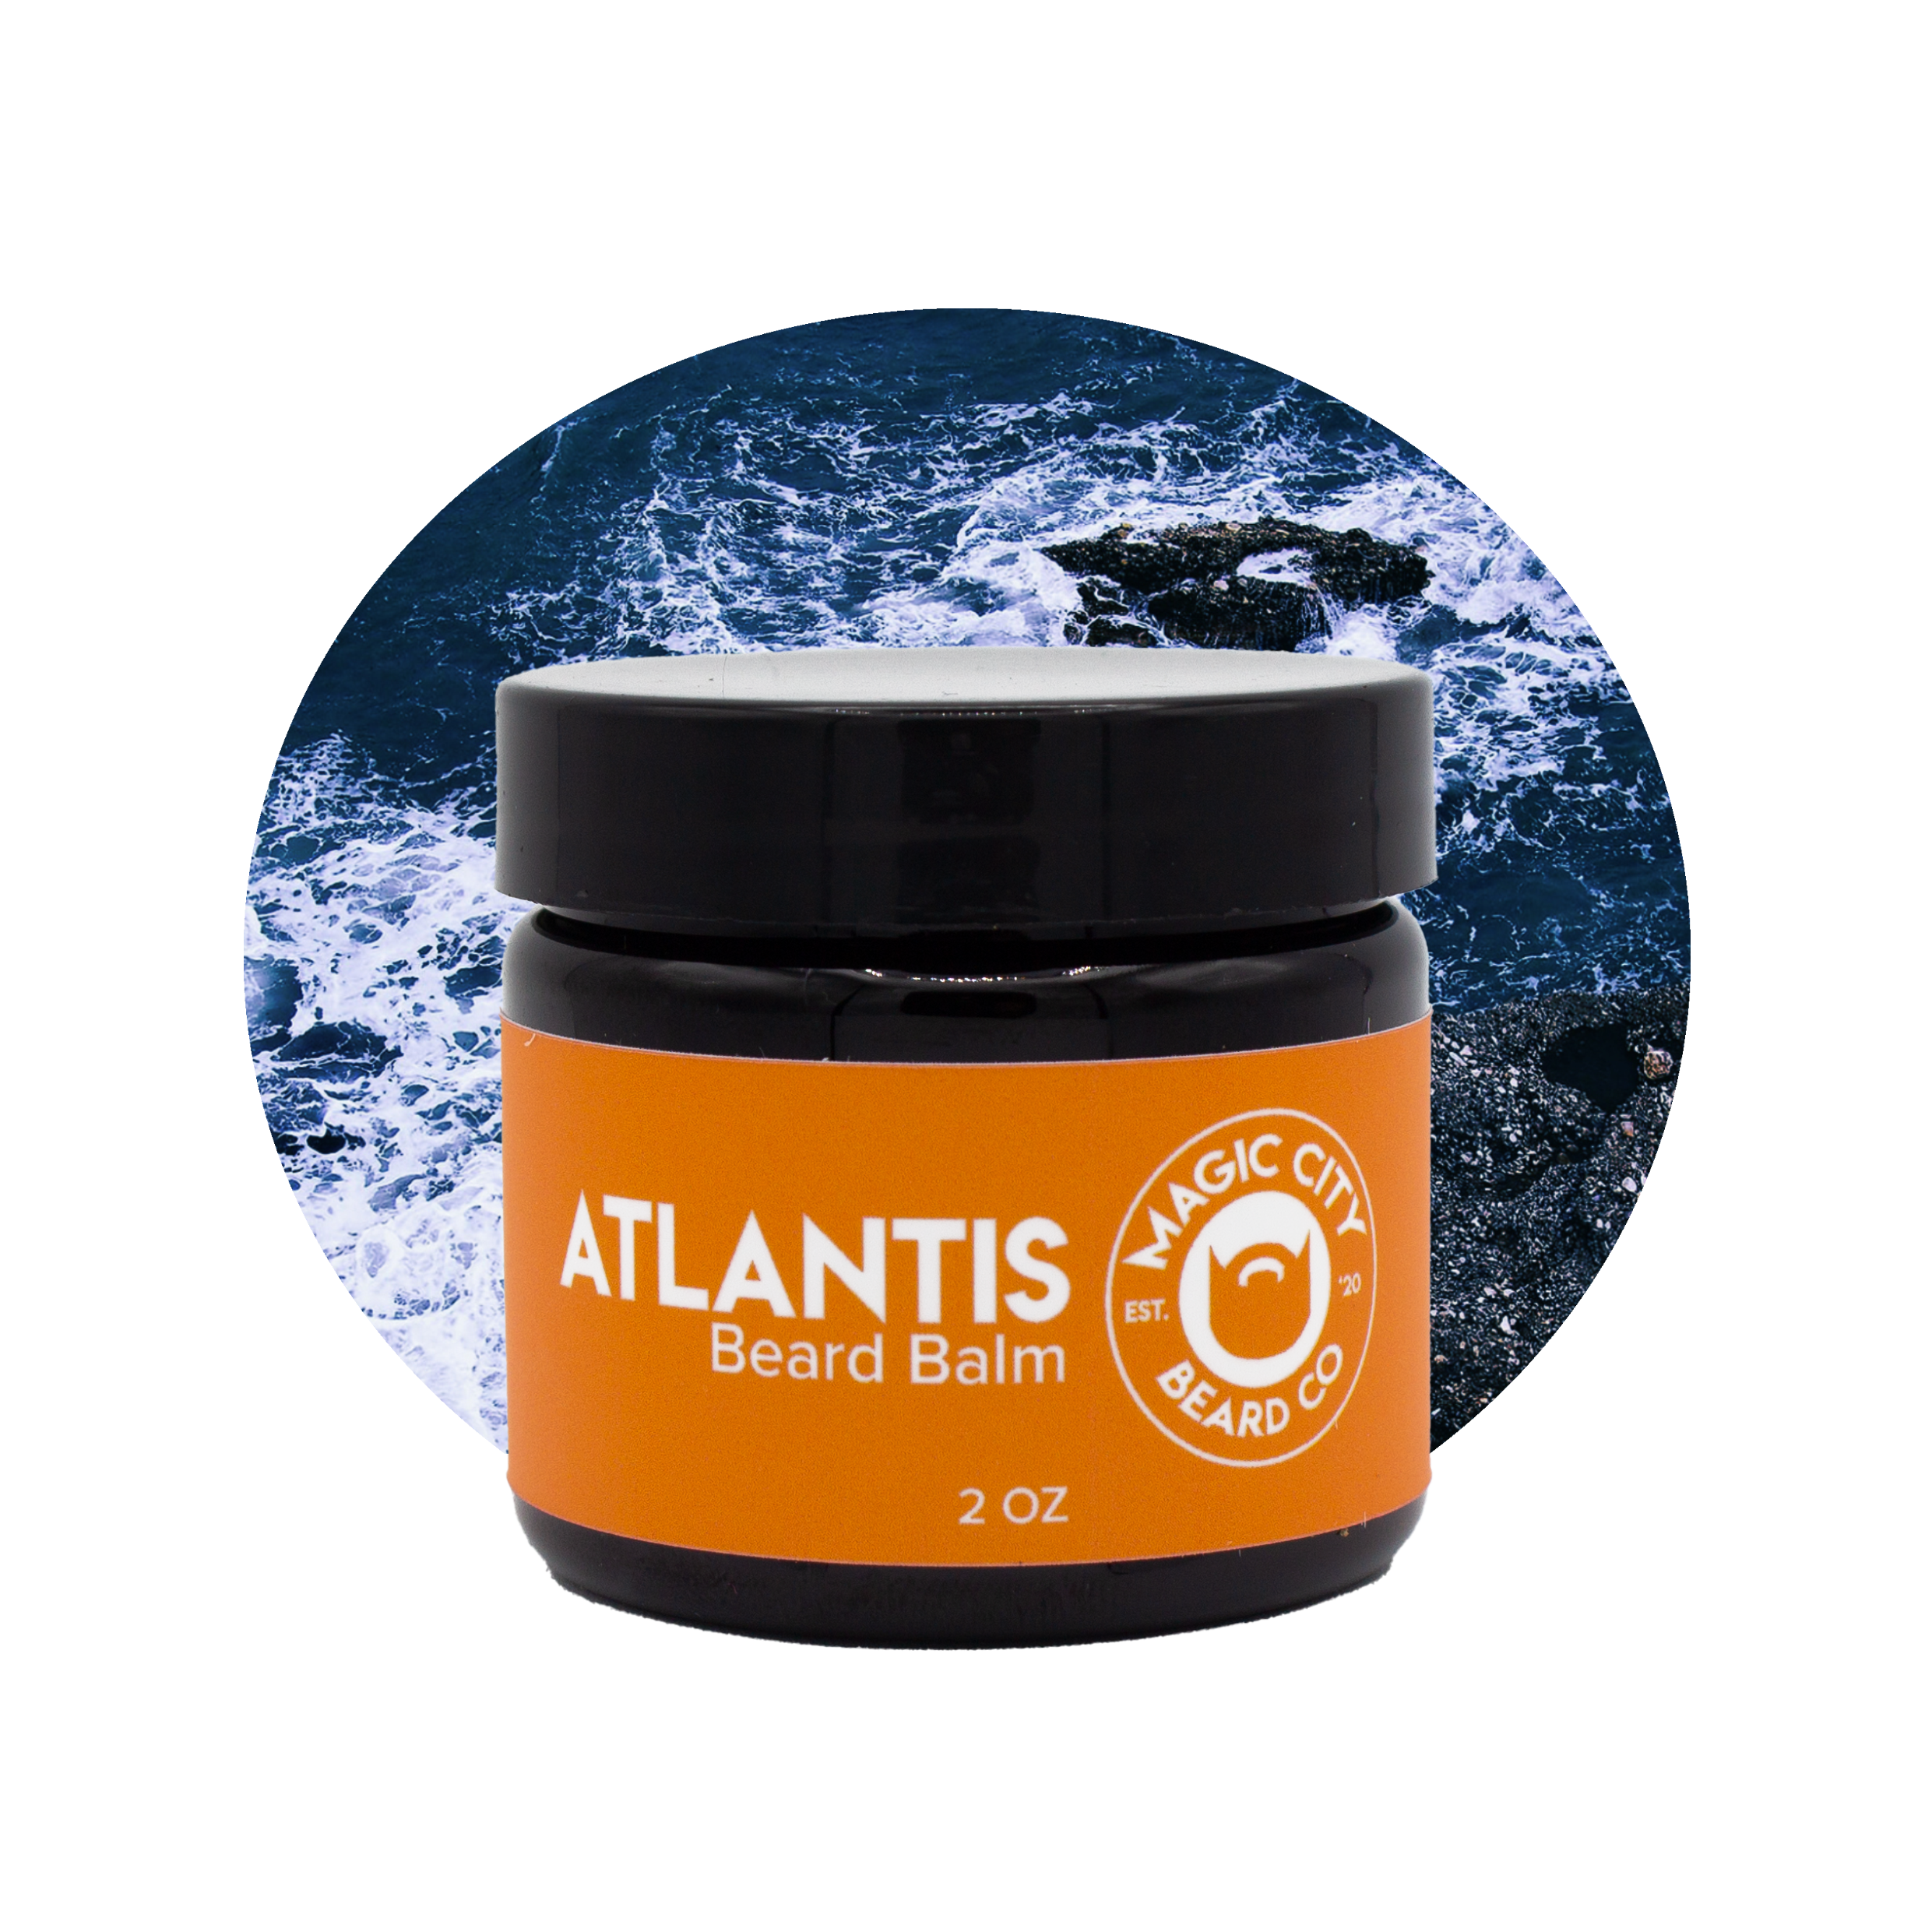 Atlantis Beard Balm